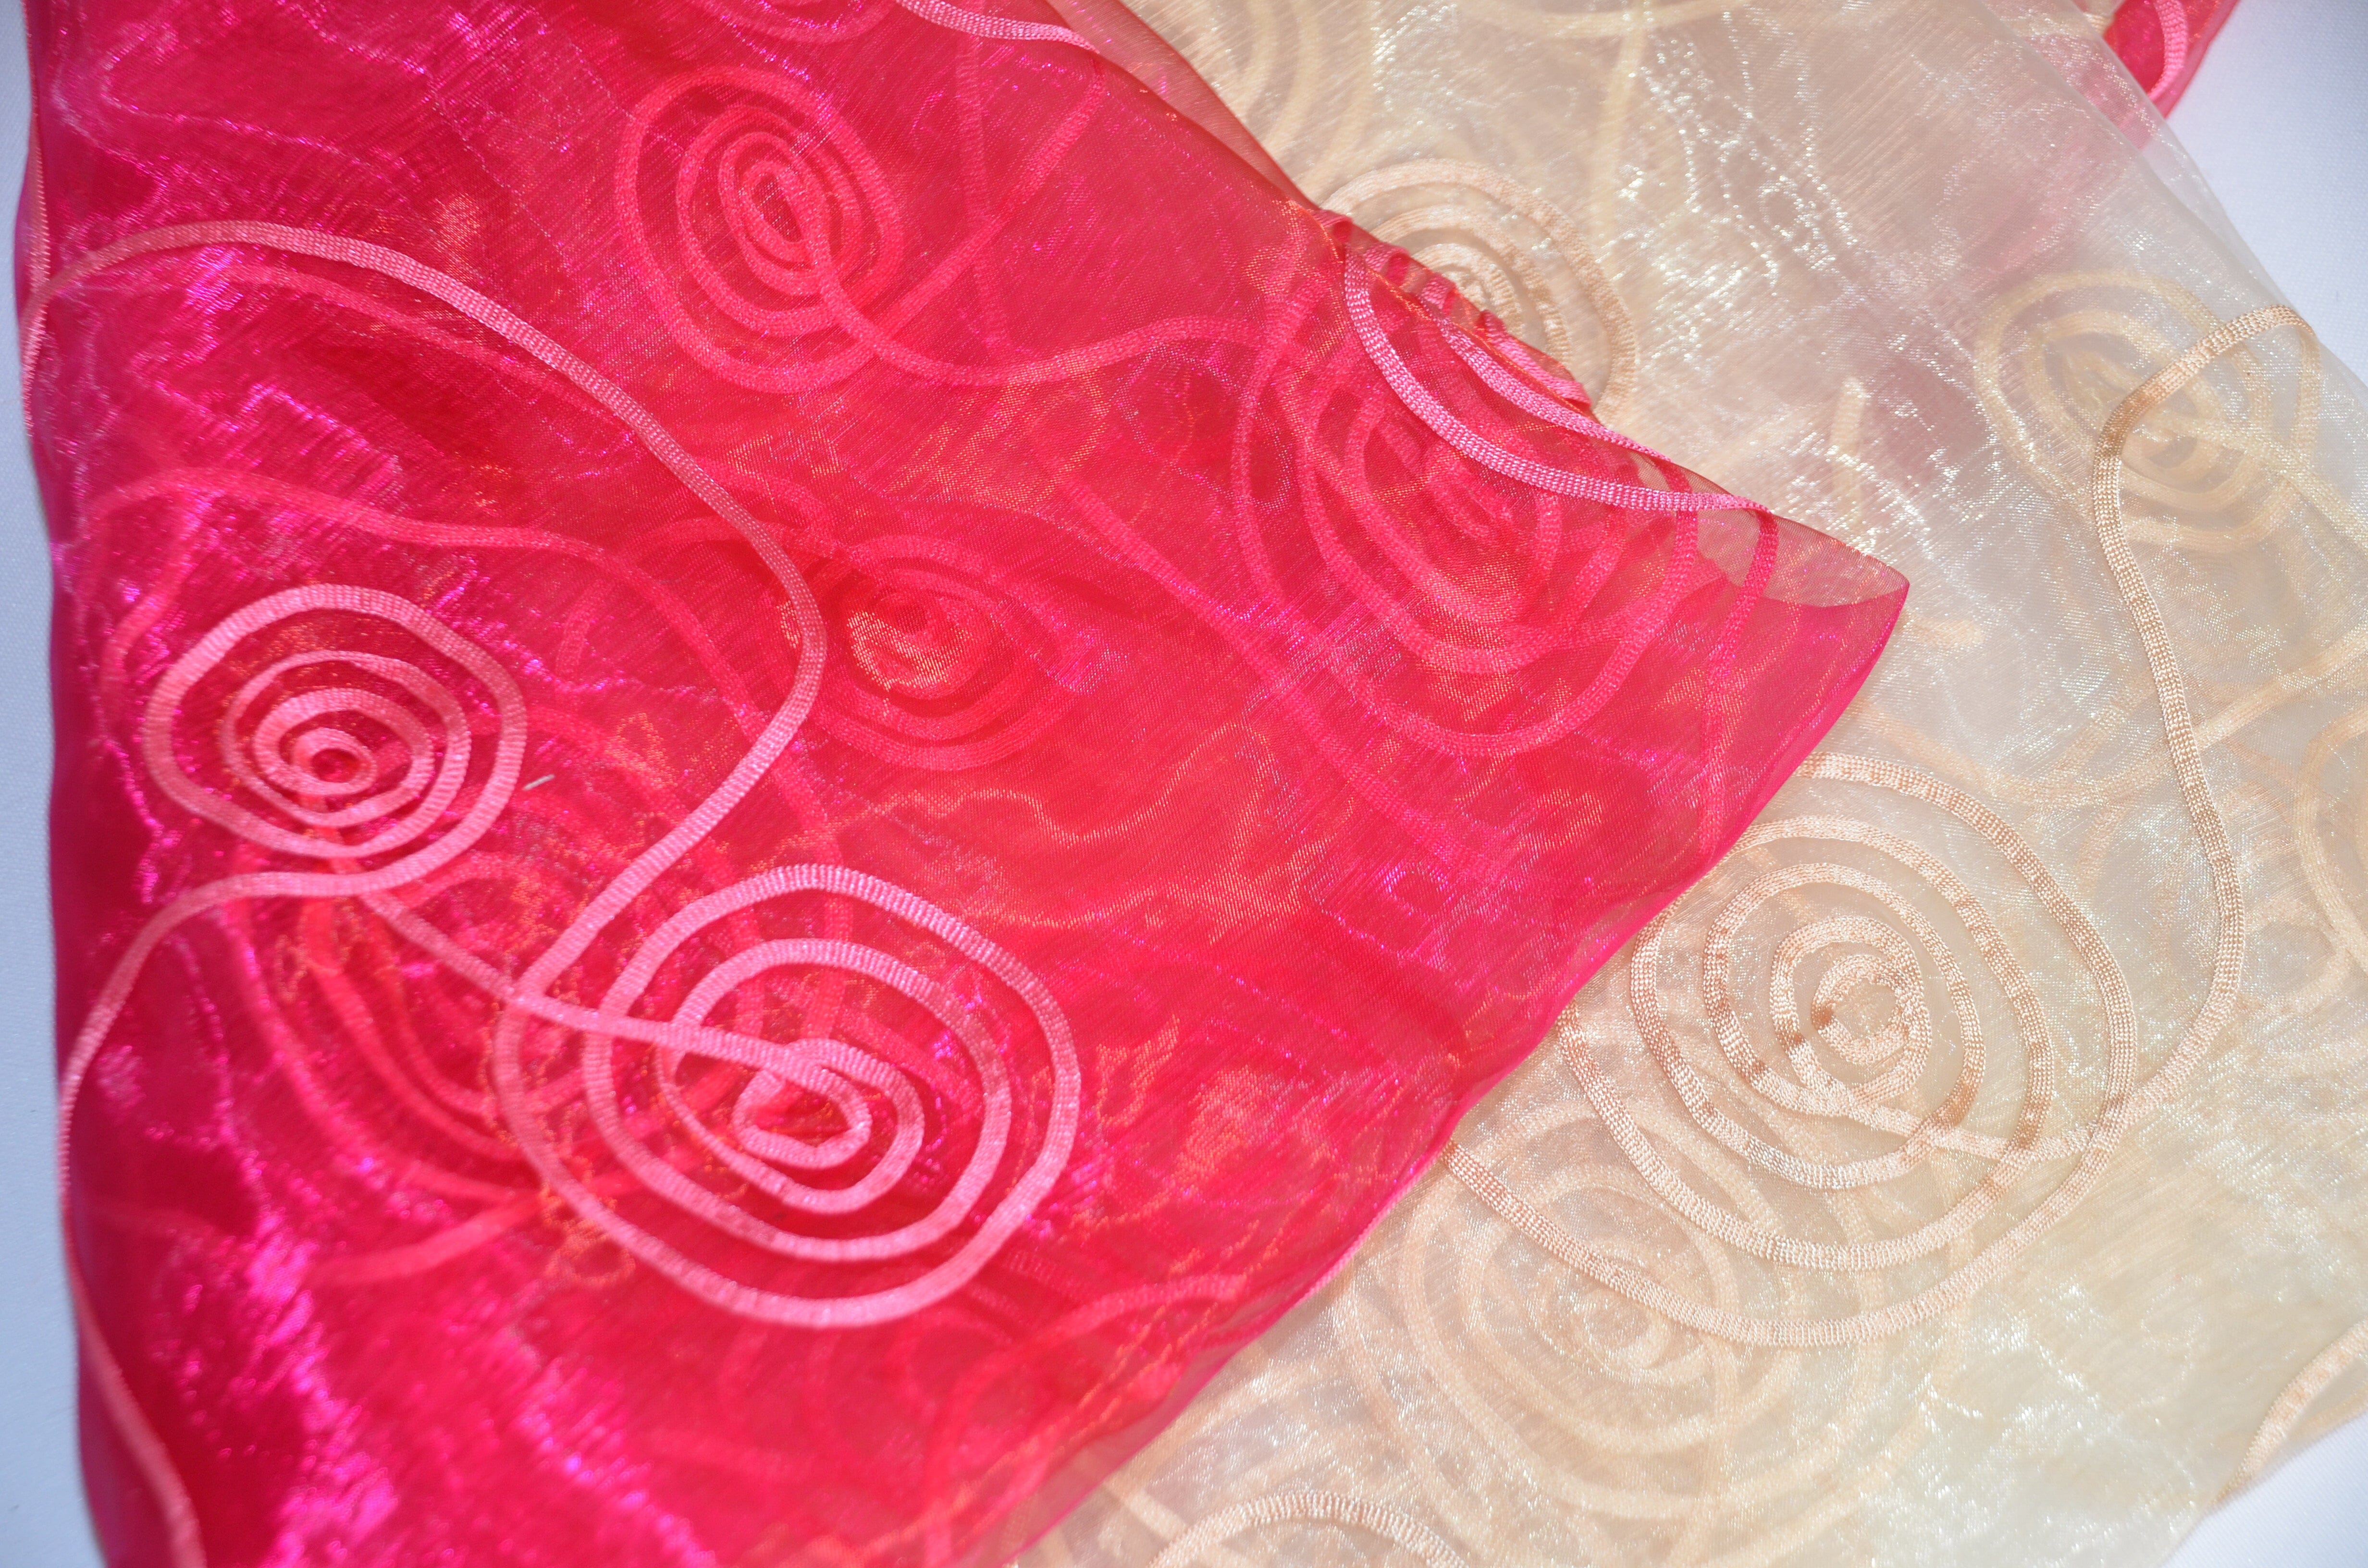 Pink & Lilac Floral Pattern Digital Printed Organza Fabric (Width